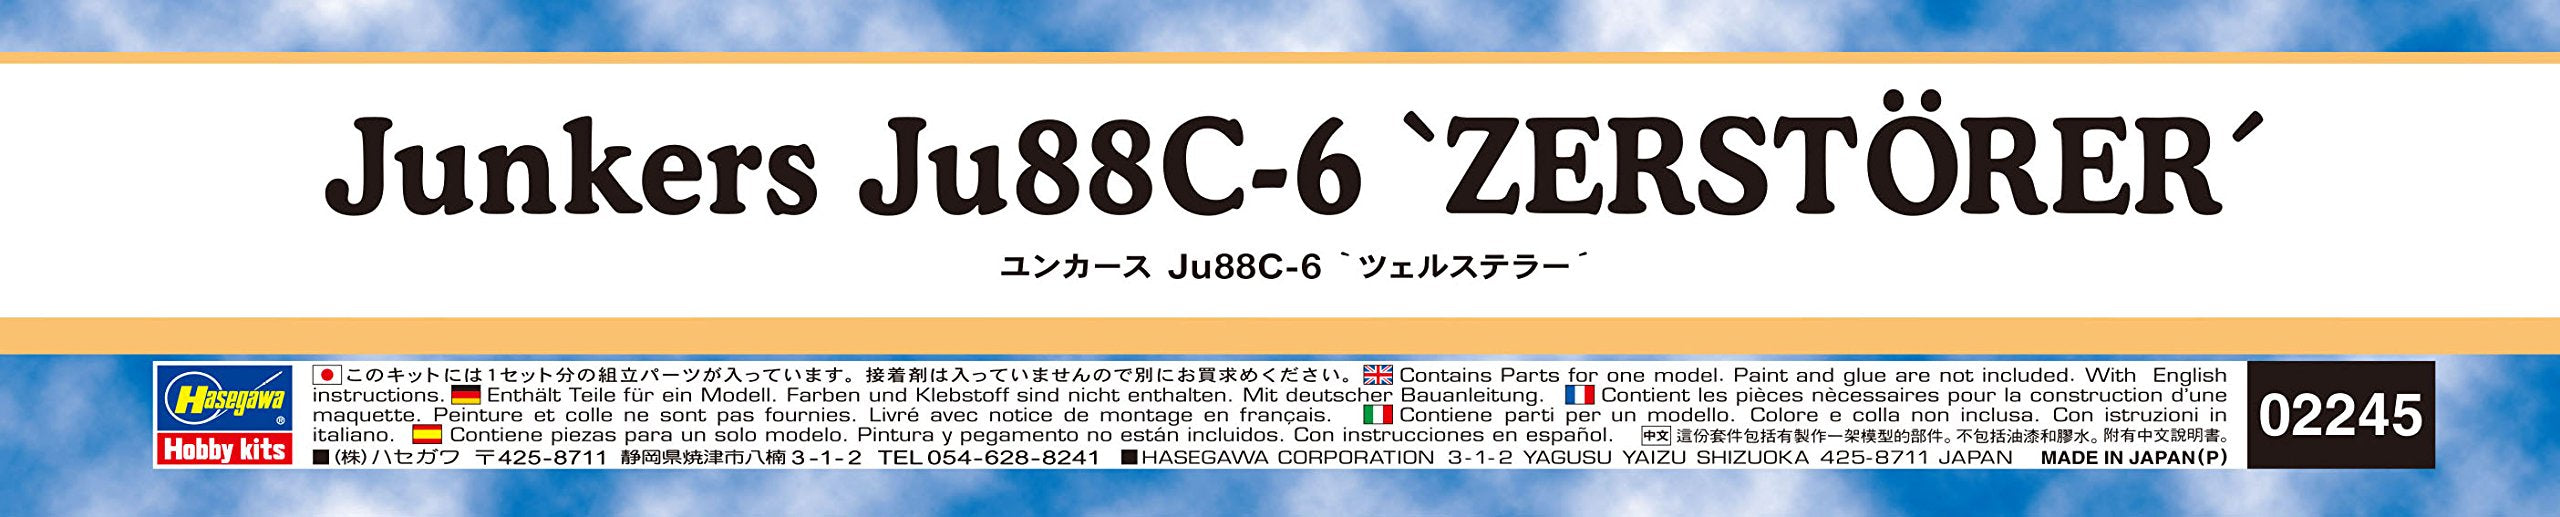 HASEGAWA 02245 Junkers Ju88C-6 Zerstorer Kit à l'échelle 1/72